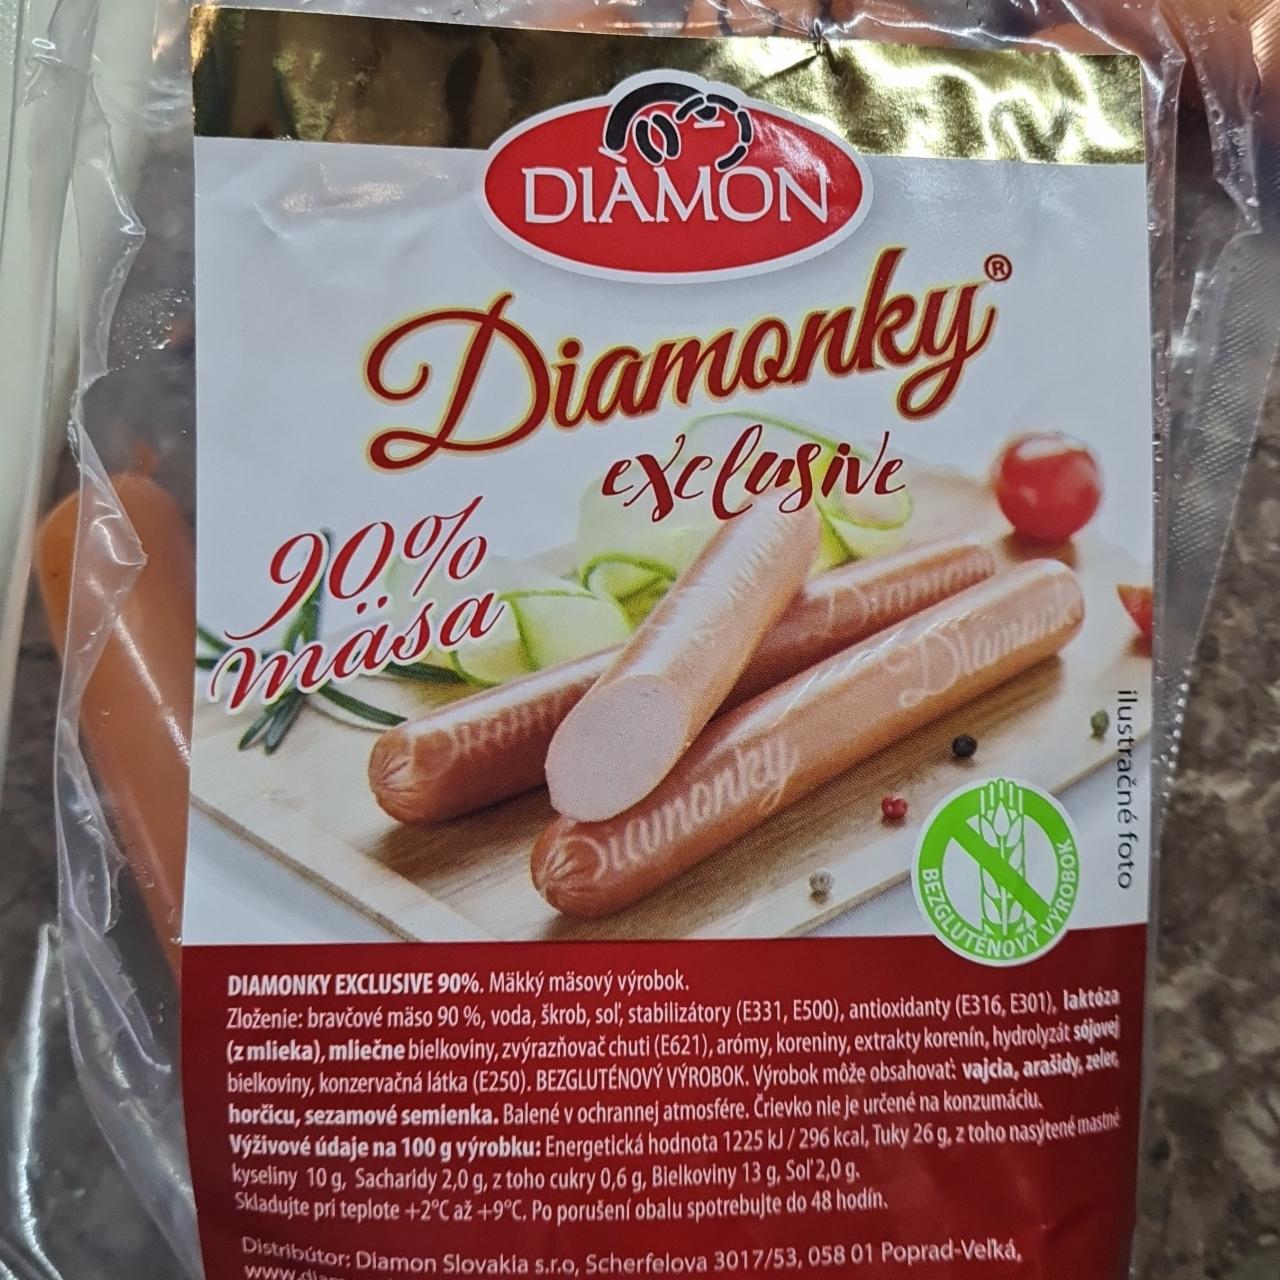 Képek - virsli - diamonky exclusive 90%